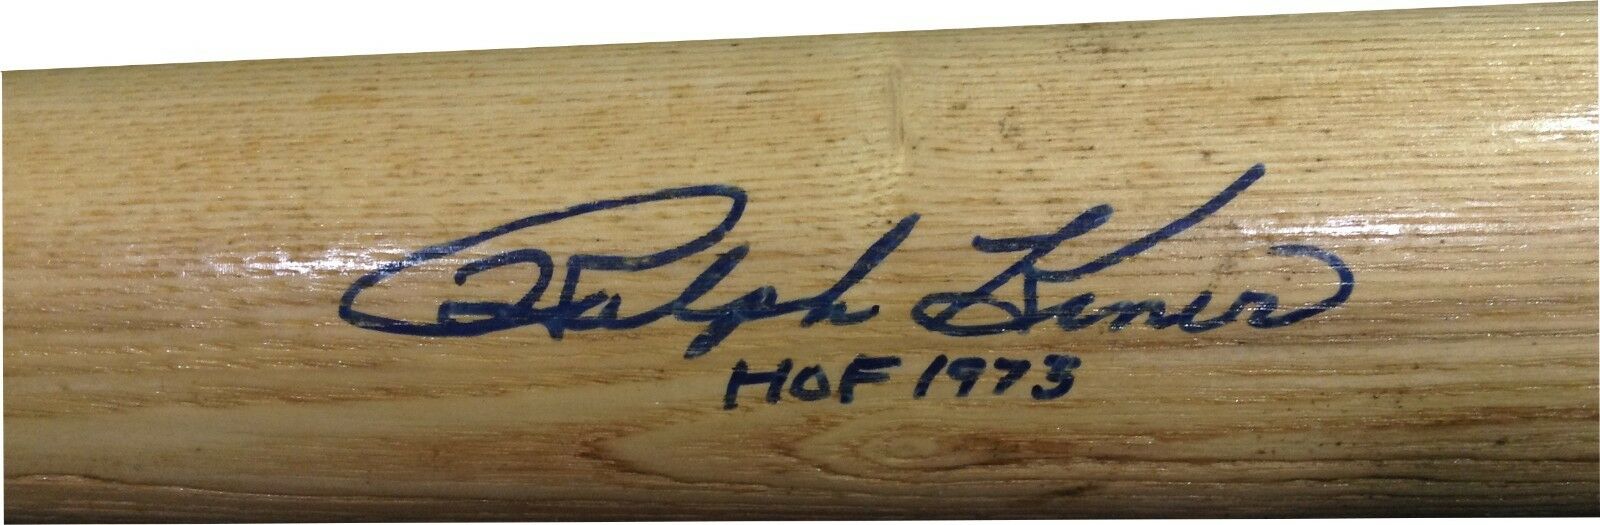 Ralph Kiner Signed Louisville Slugger Bat Inscribed HOF 1975 Vintage Auto COA